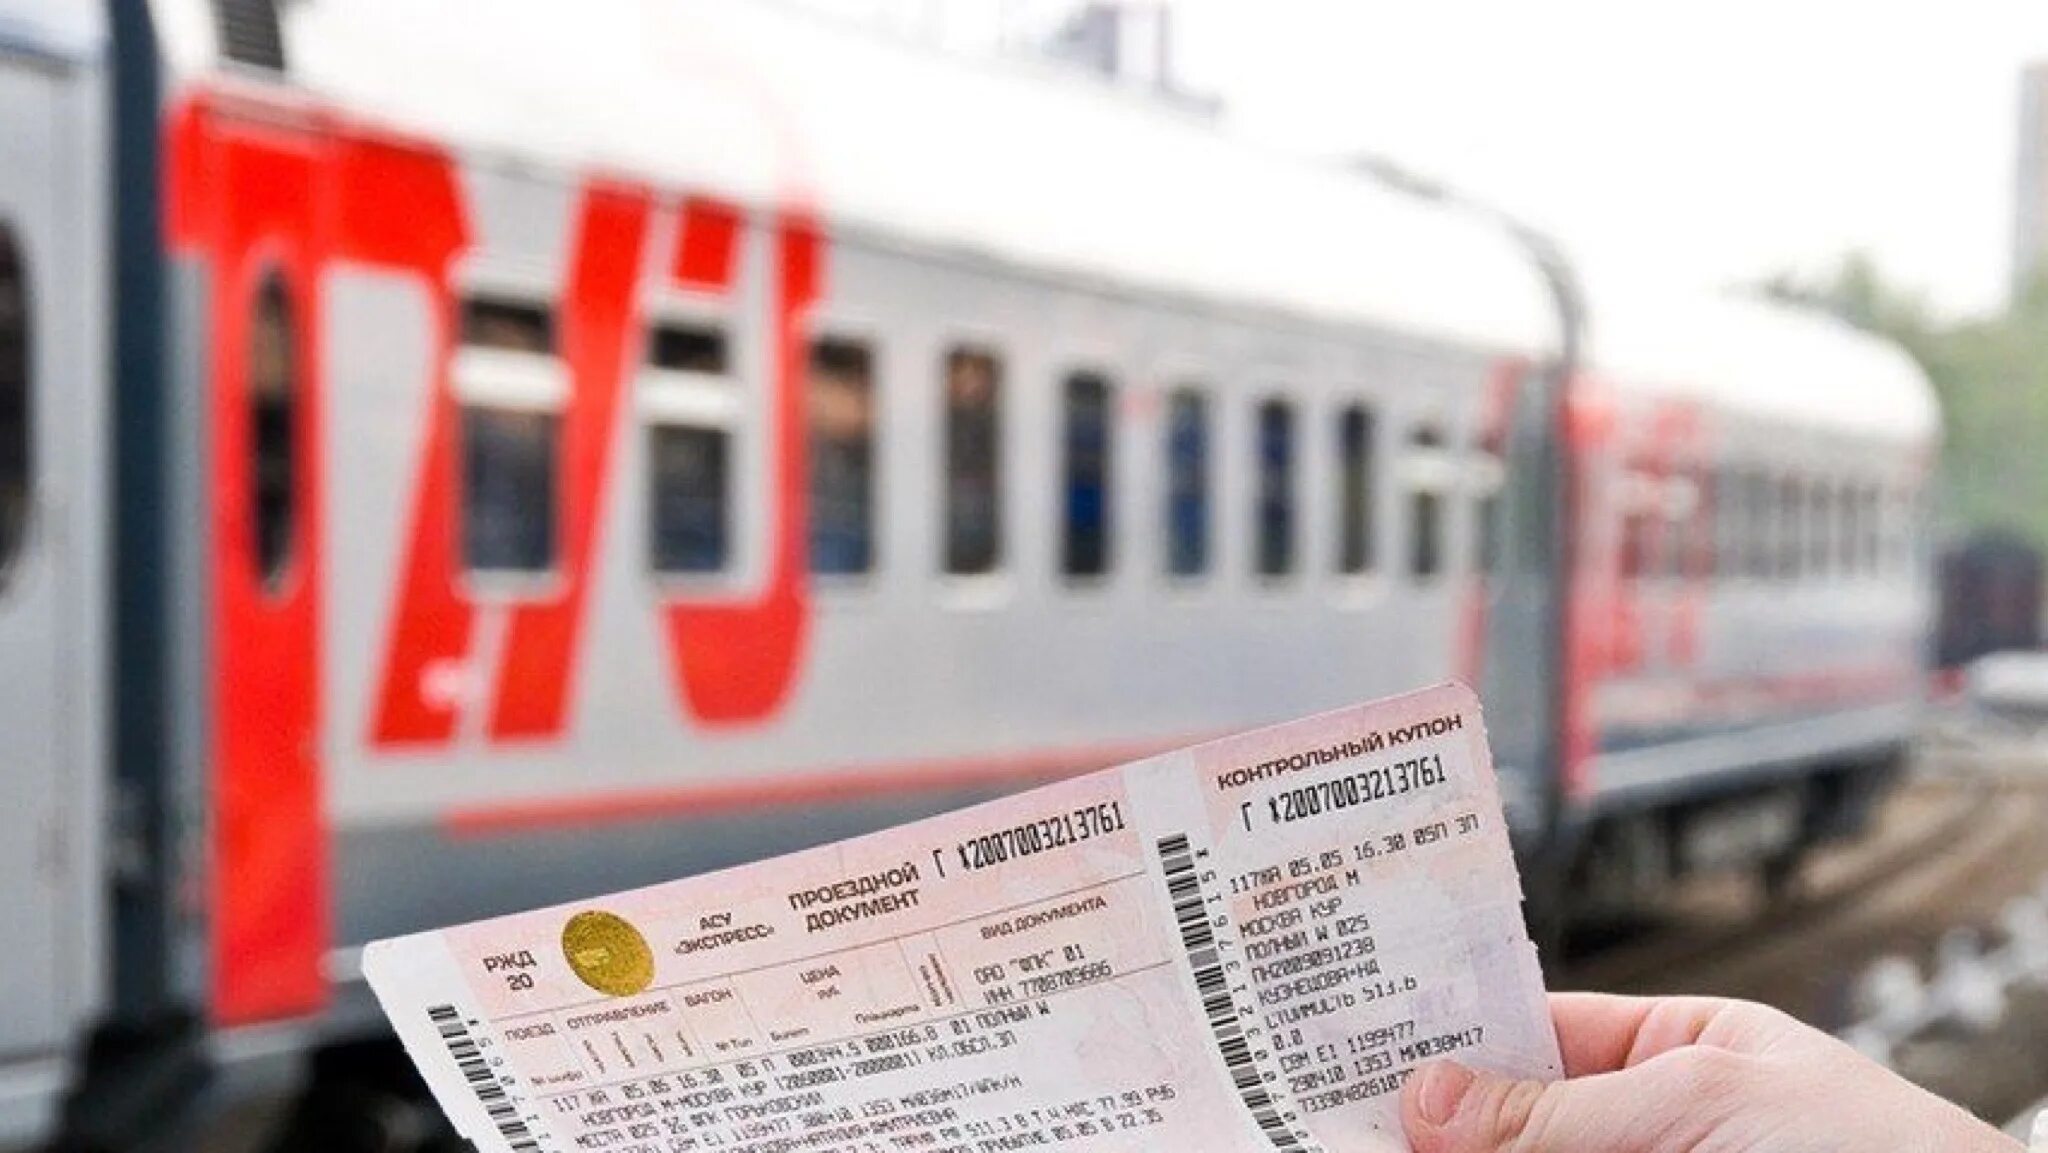 ЖД билеты. Фото билетов на поезд. Билеты ЖД на поезд. Компенсация проезда.